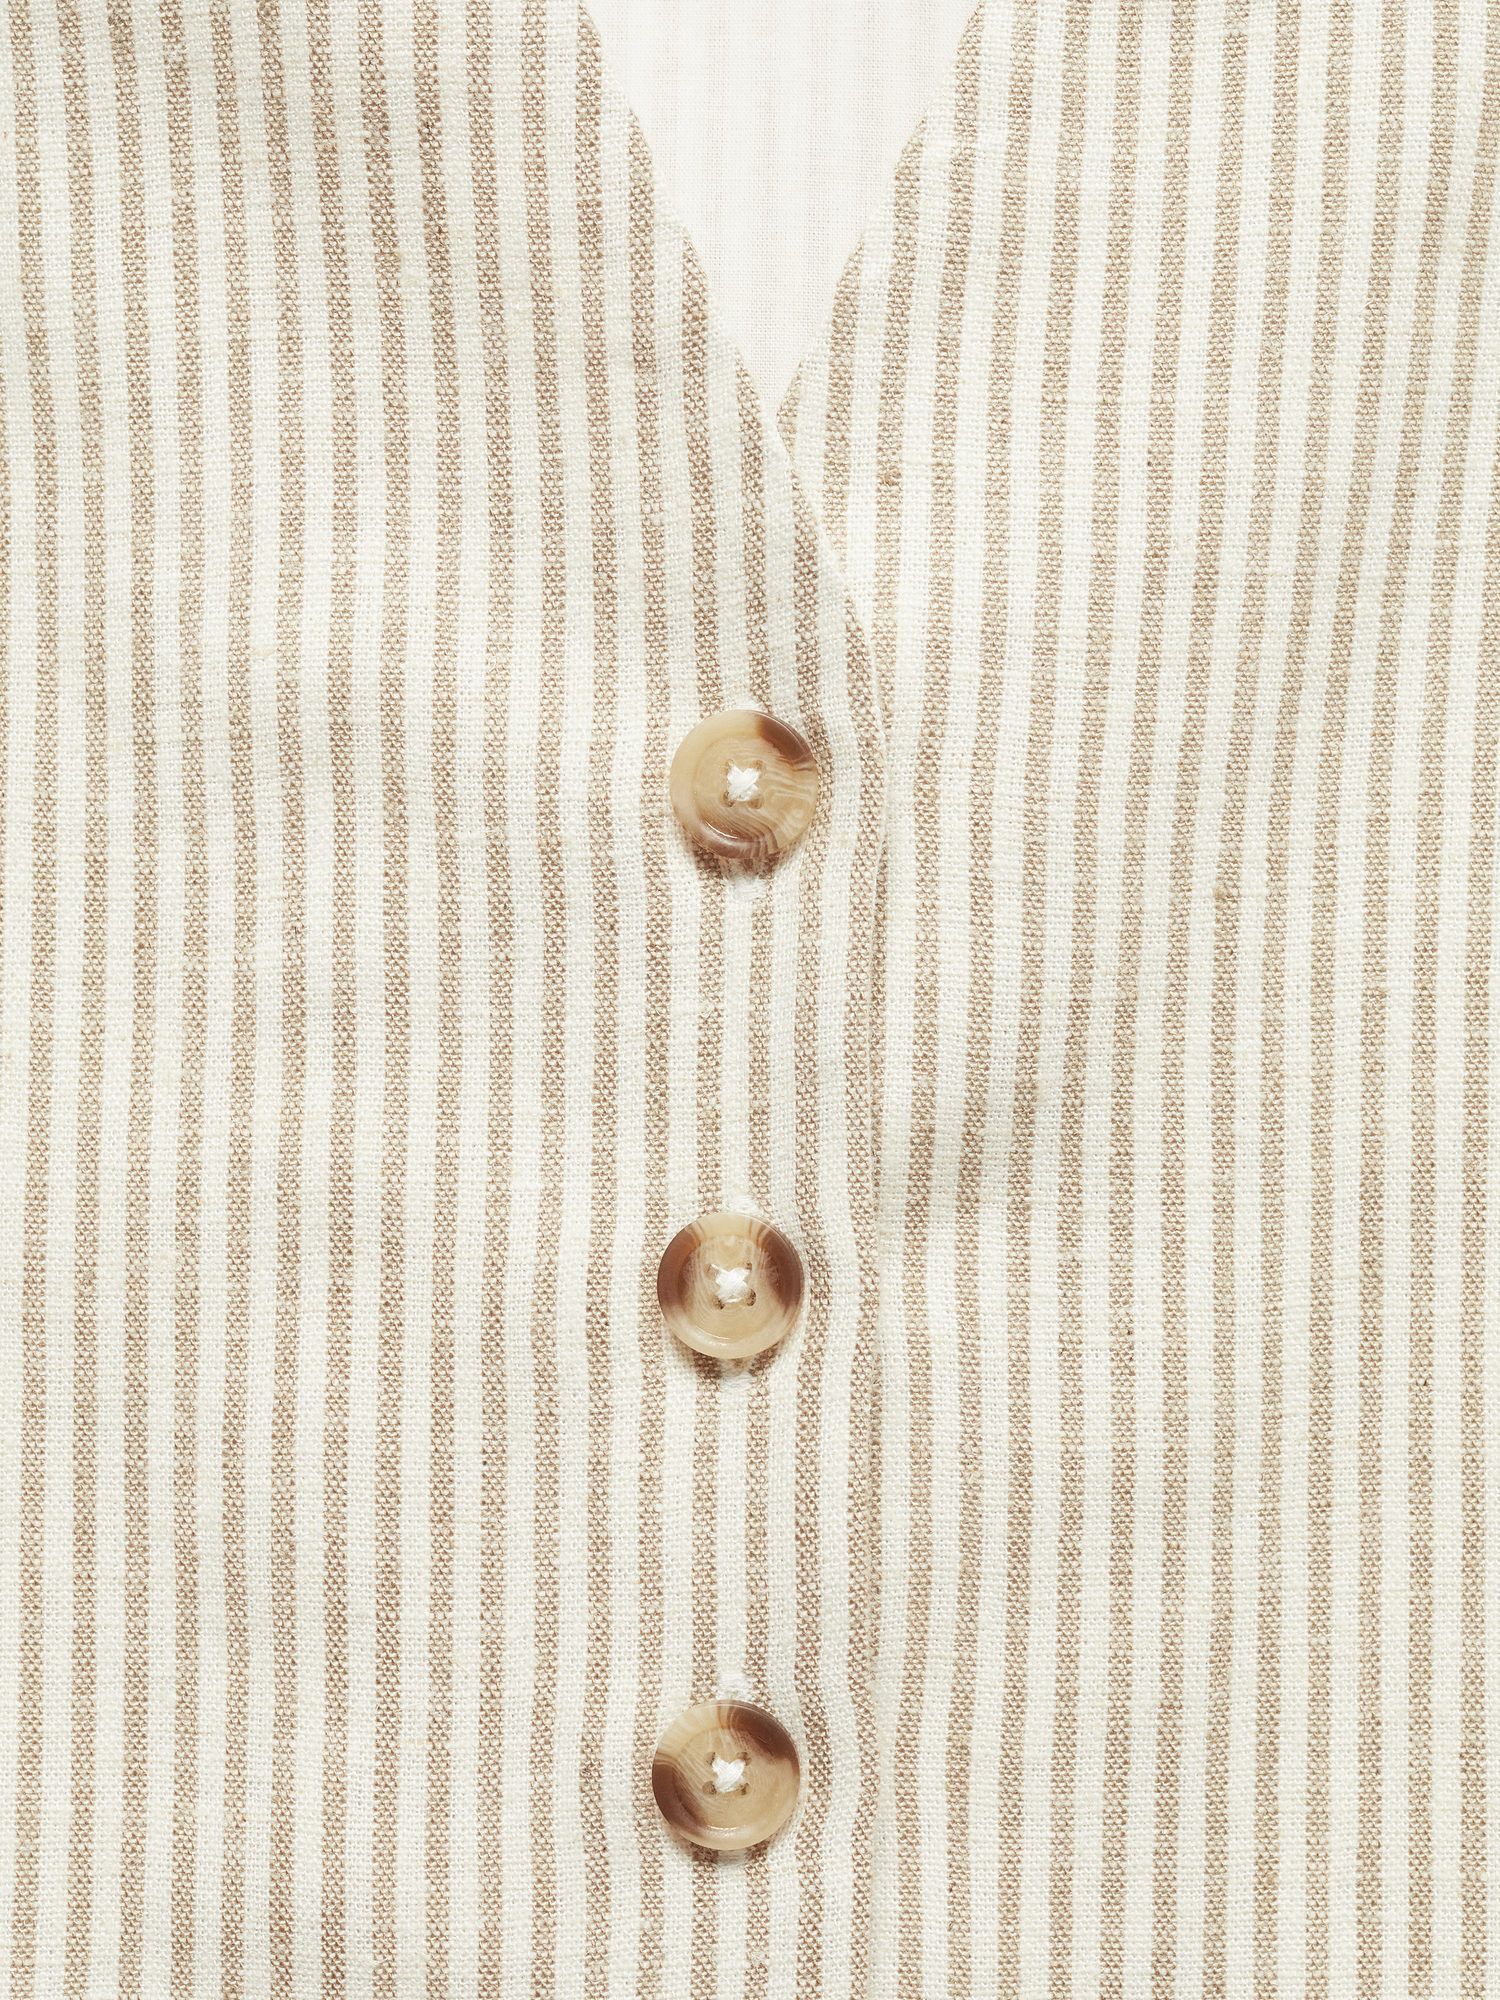 Mango Bali Stripped Linen Blend Suit Waistcoat, Light Beige, XXS